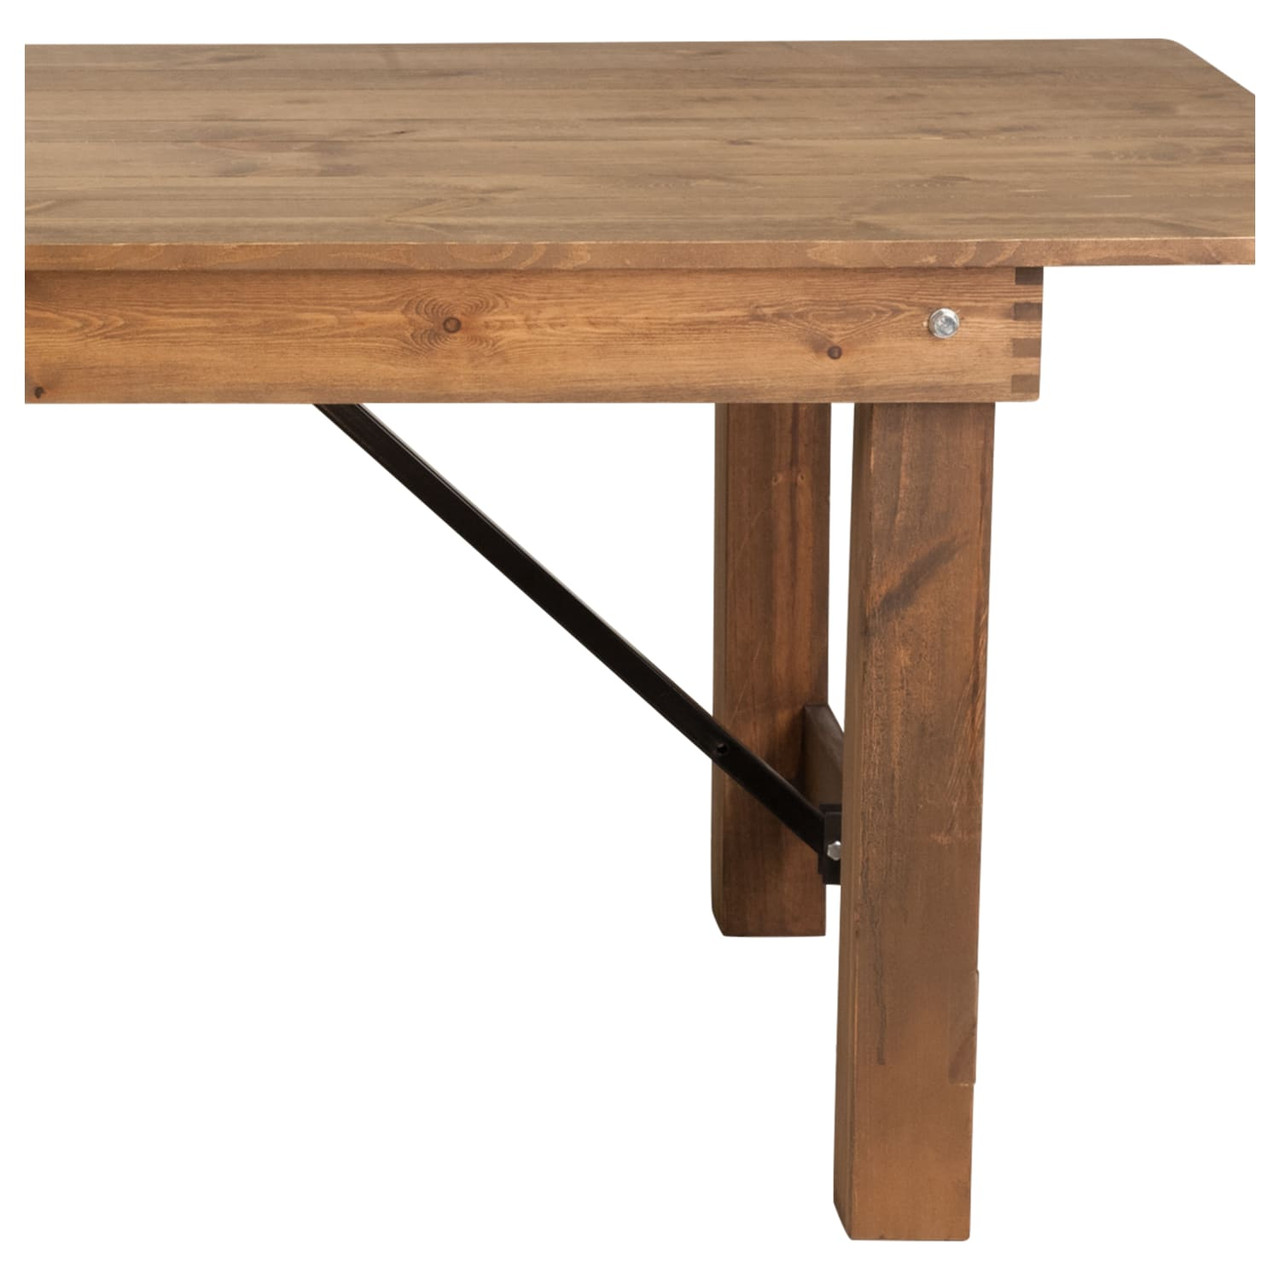 HERCULES Series 8' x 40” Rectangular Antique Rustic Solid Pine Folding Farm Table